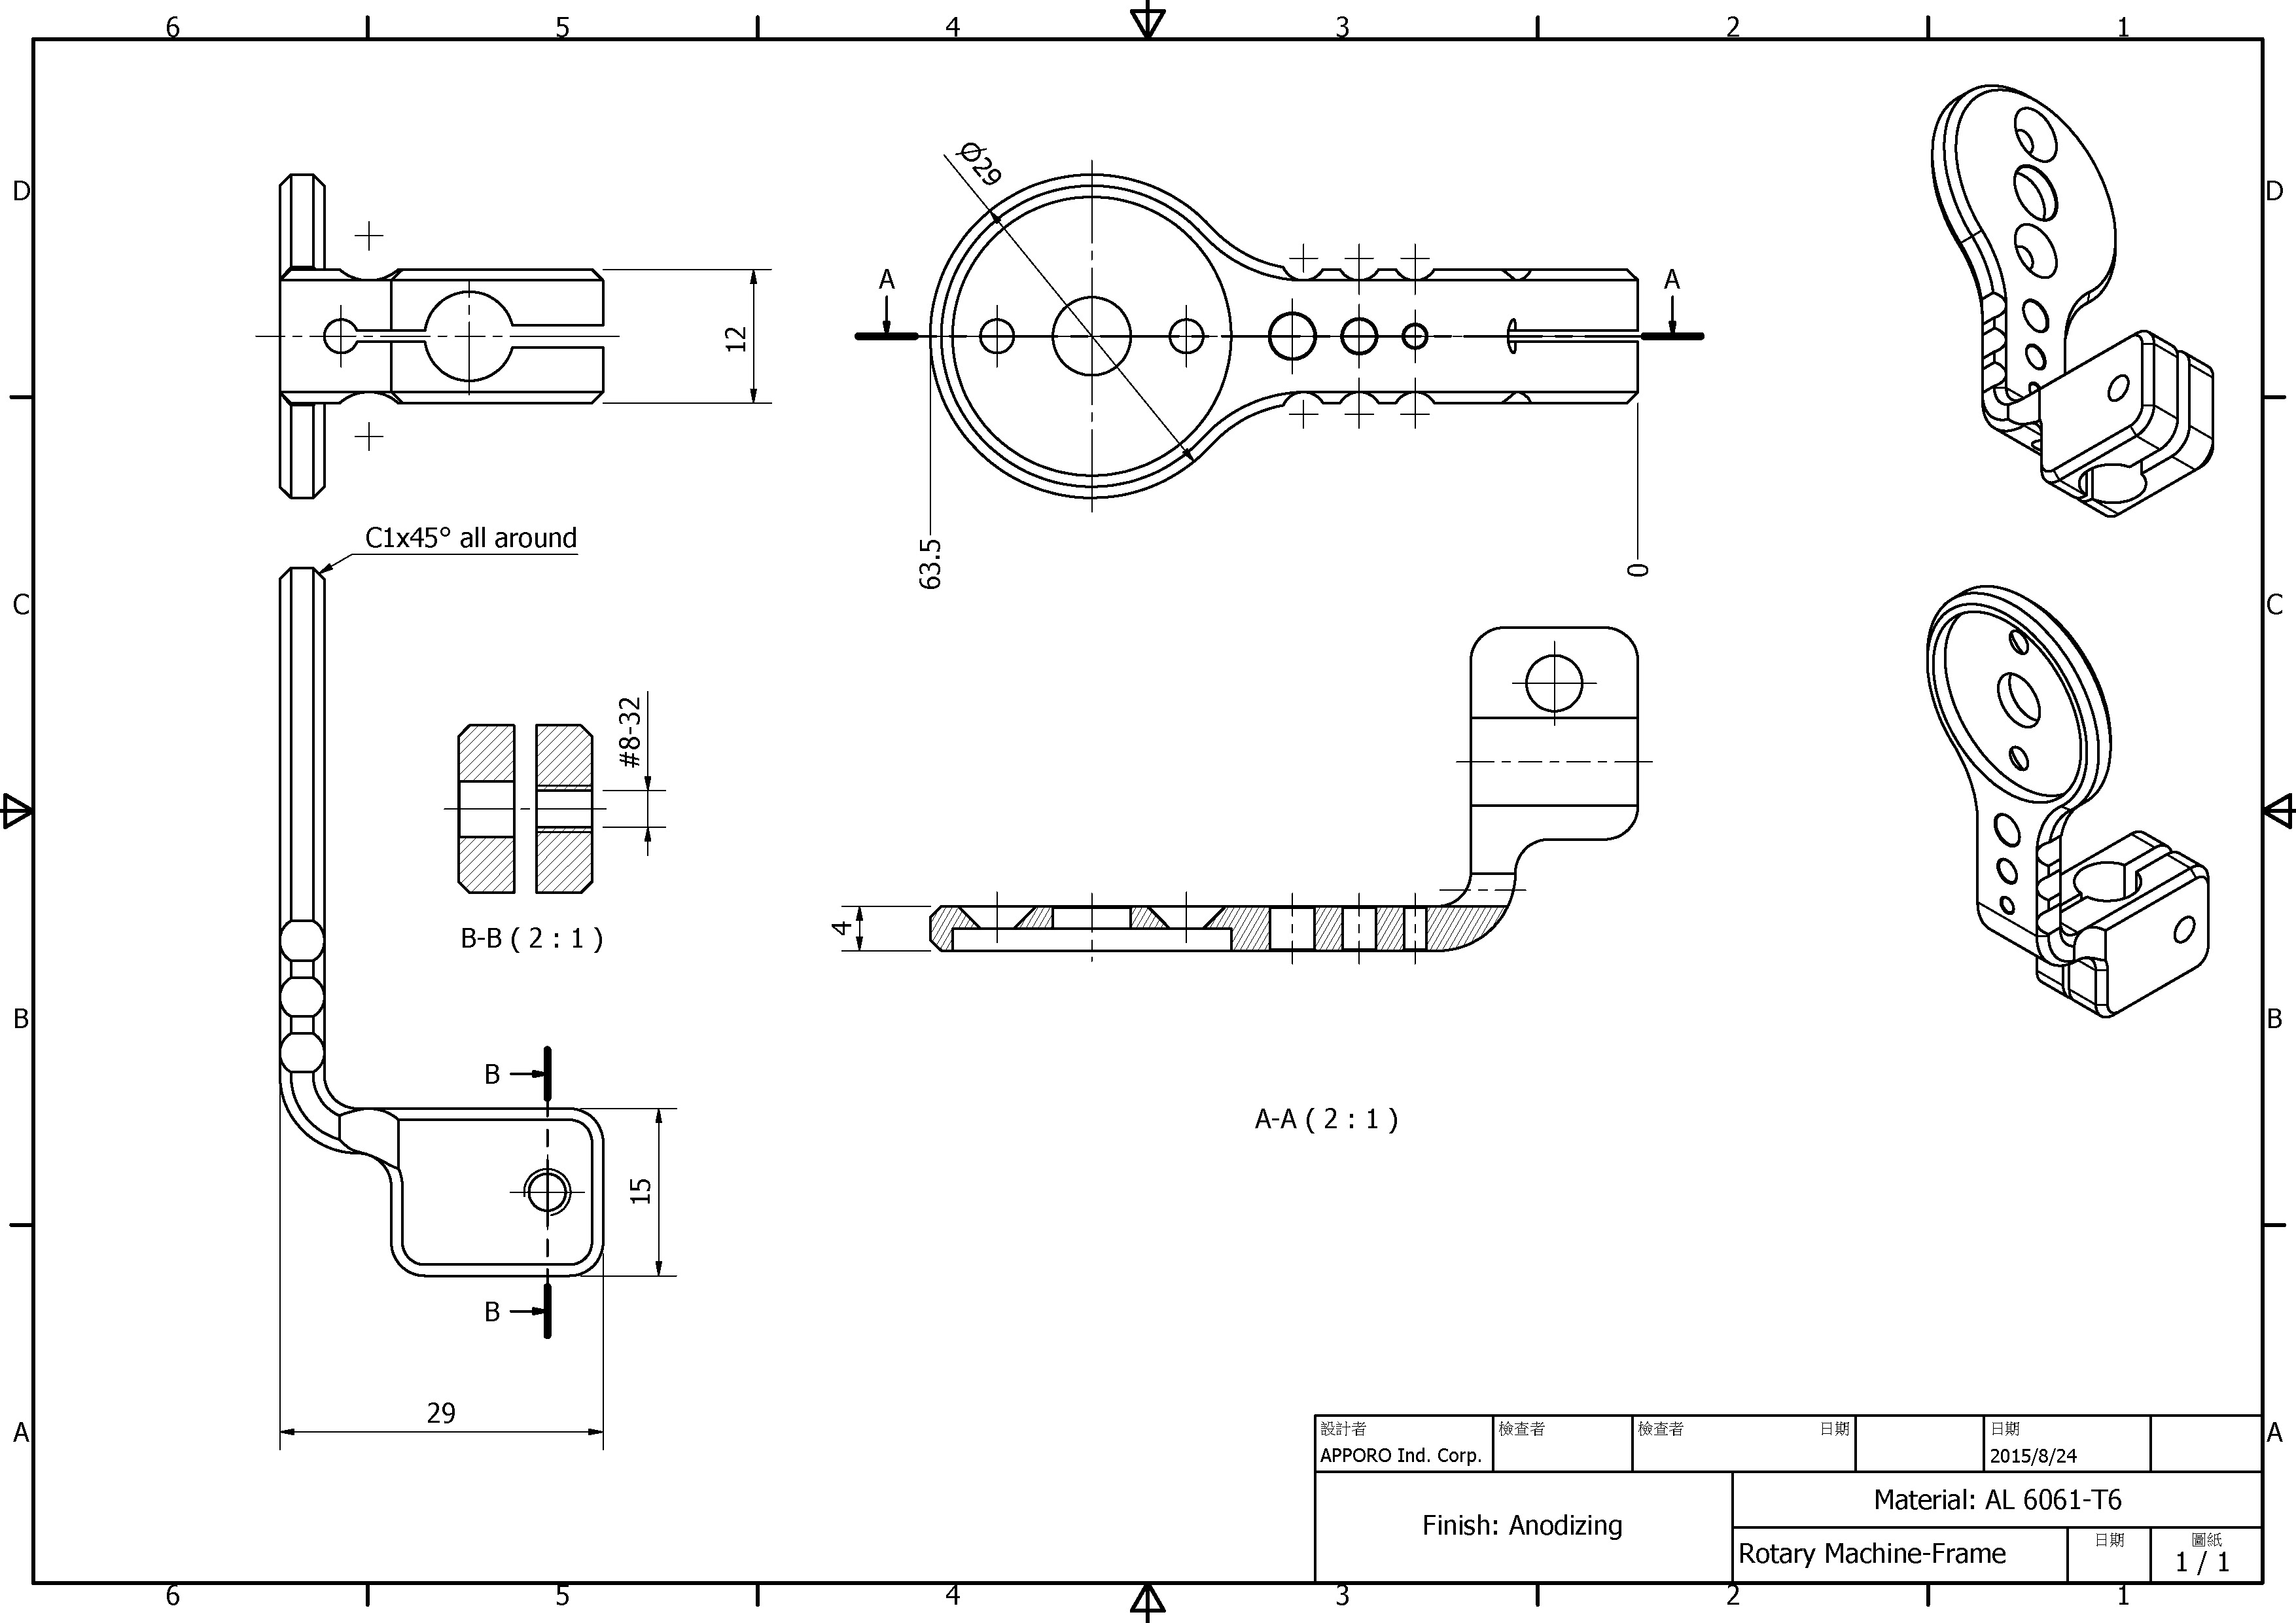 CNC Machining Services: Rotary Tattoo Machine - Frame for CNC machine programming